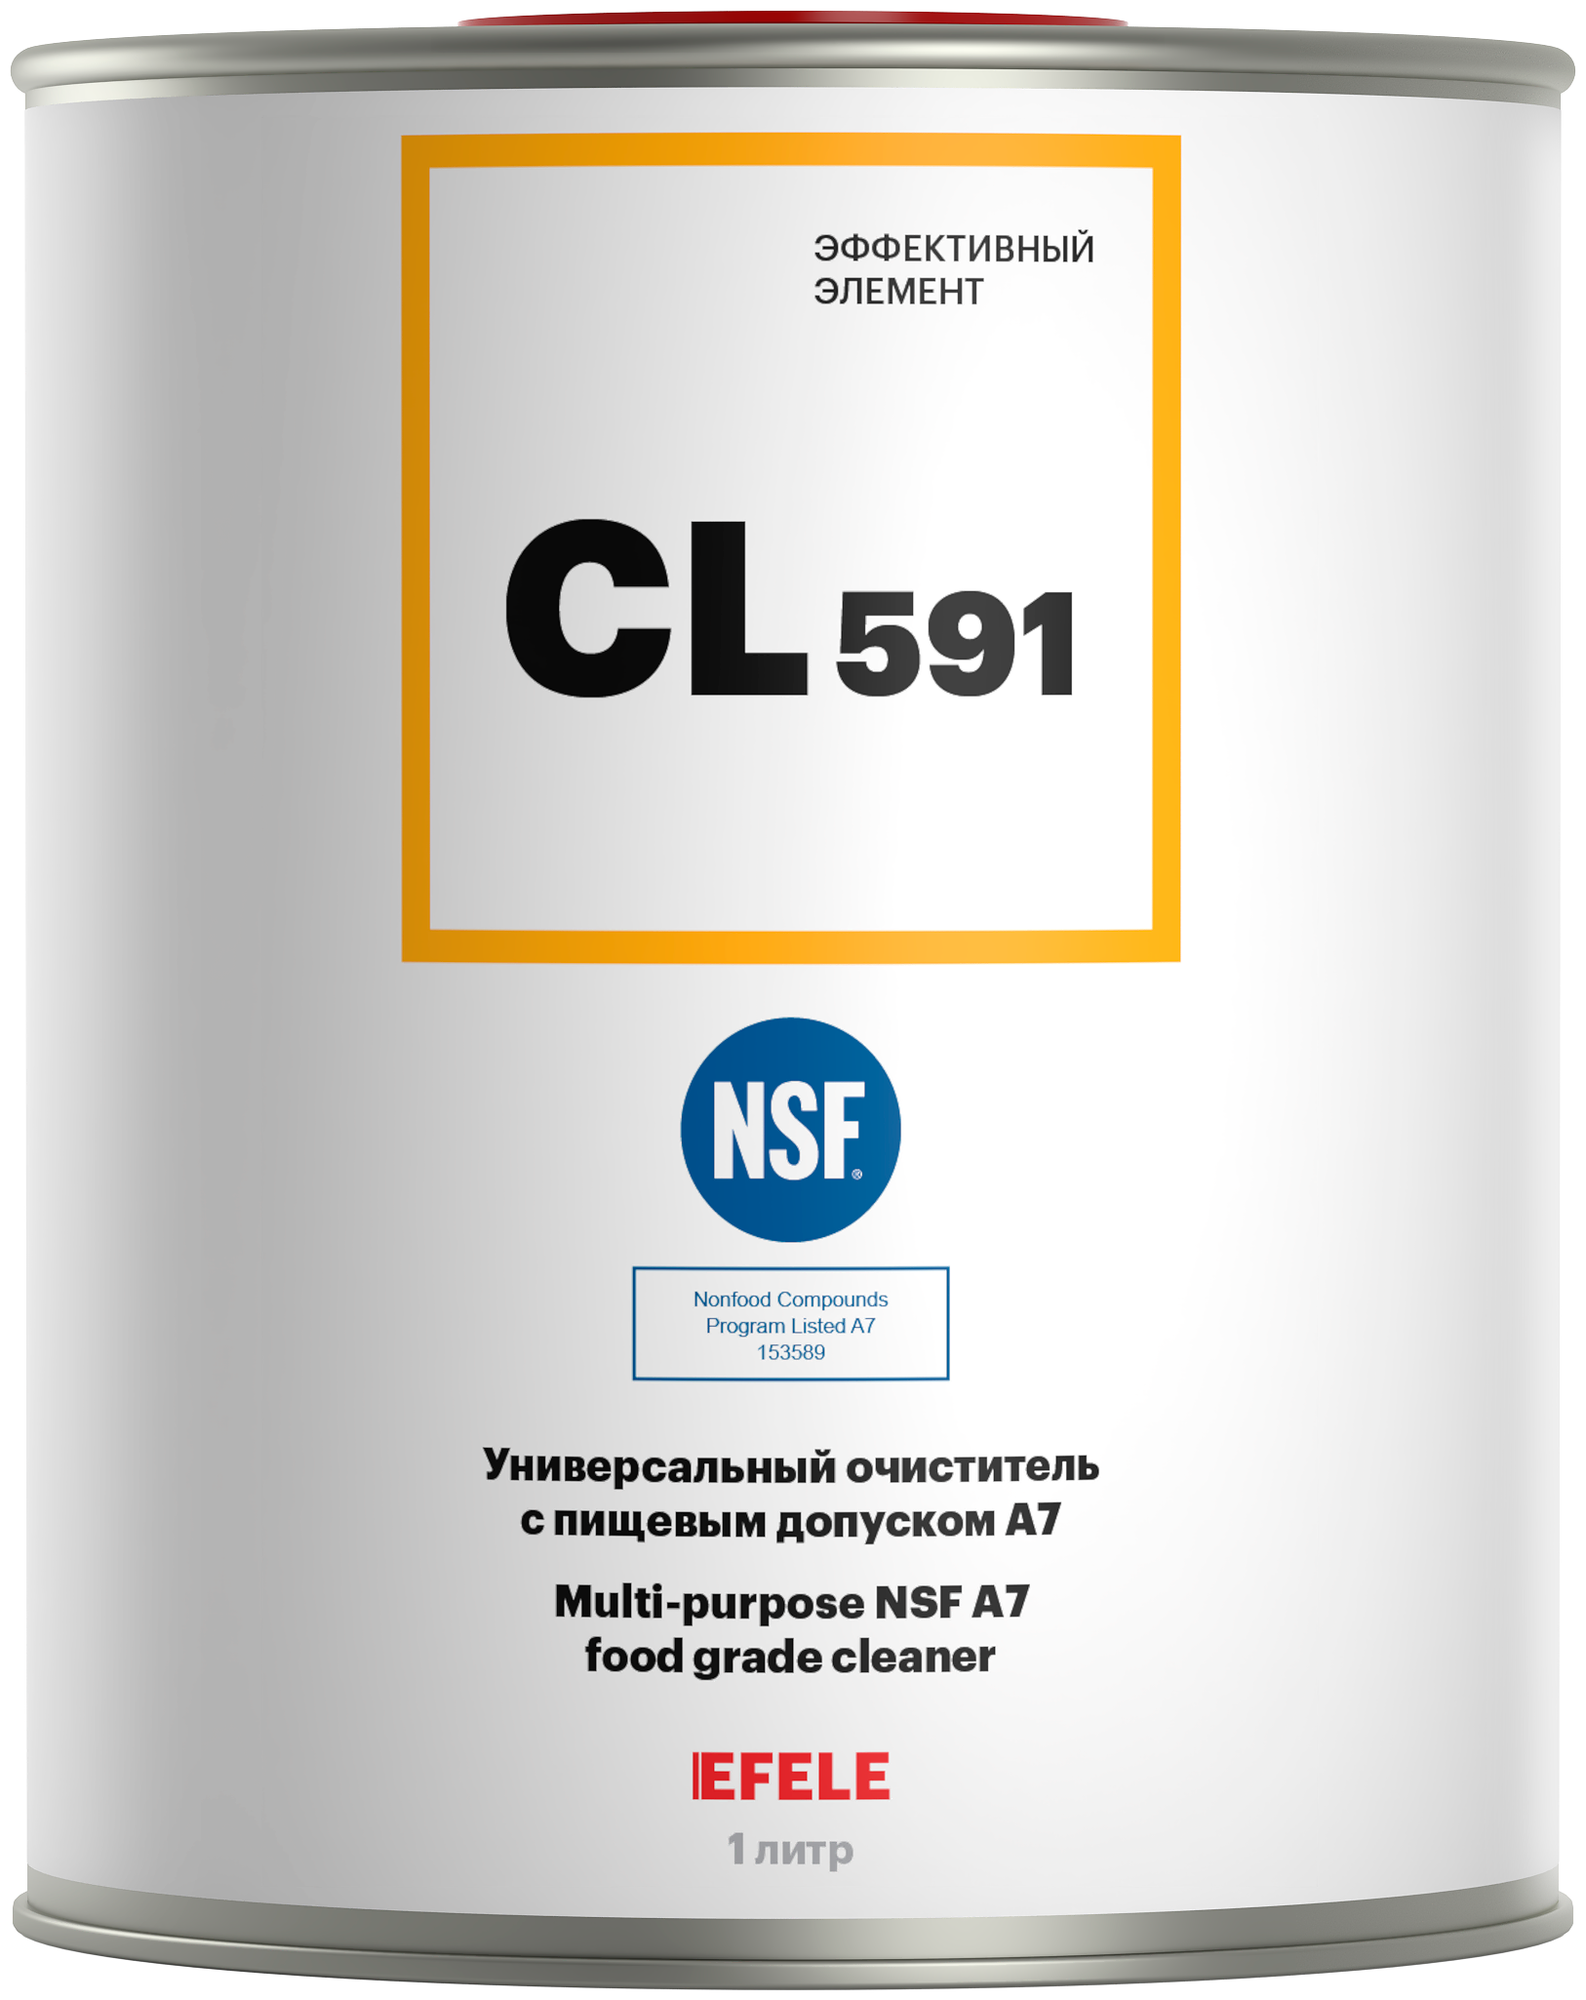 EFELE CL-591 NSF A7